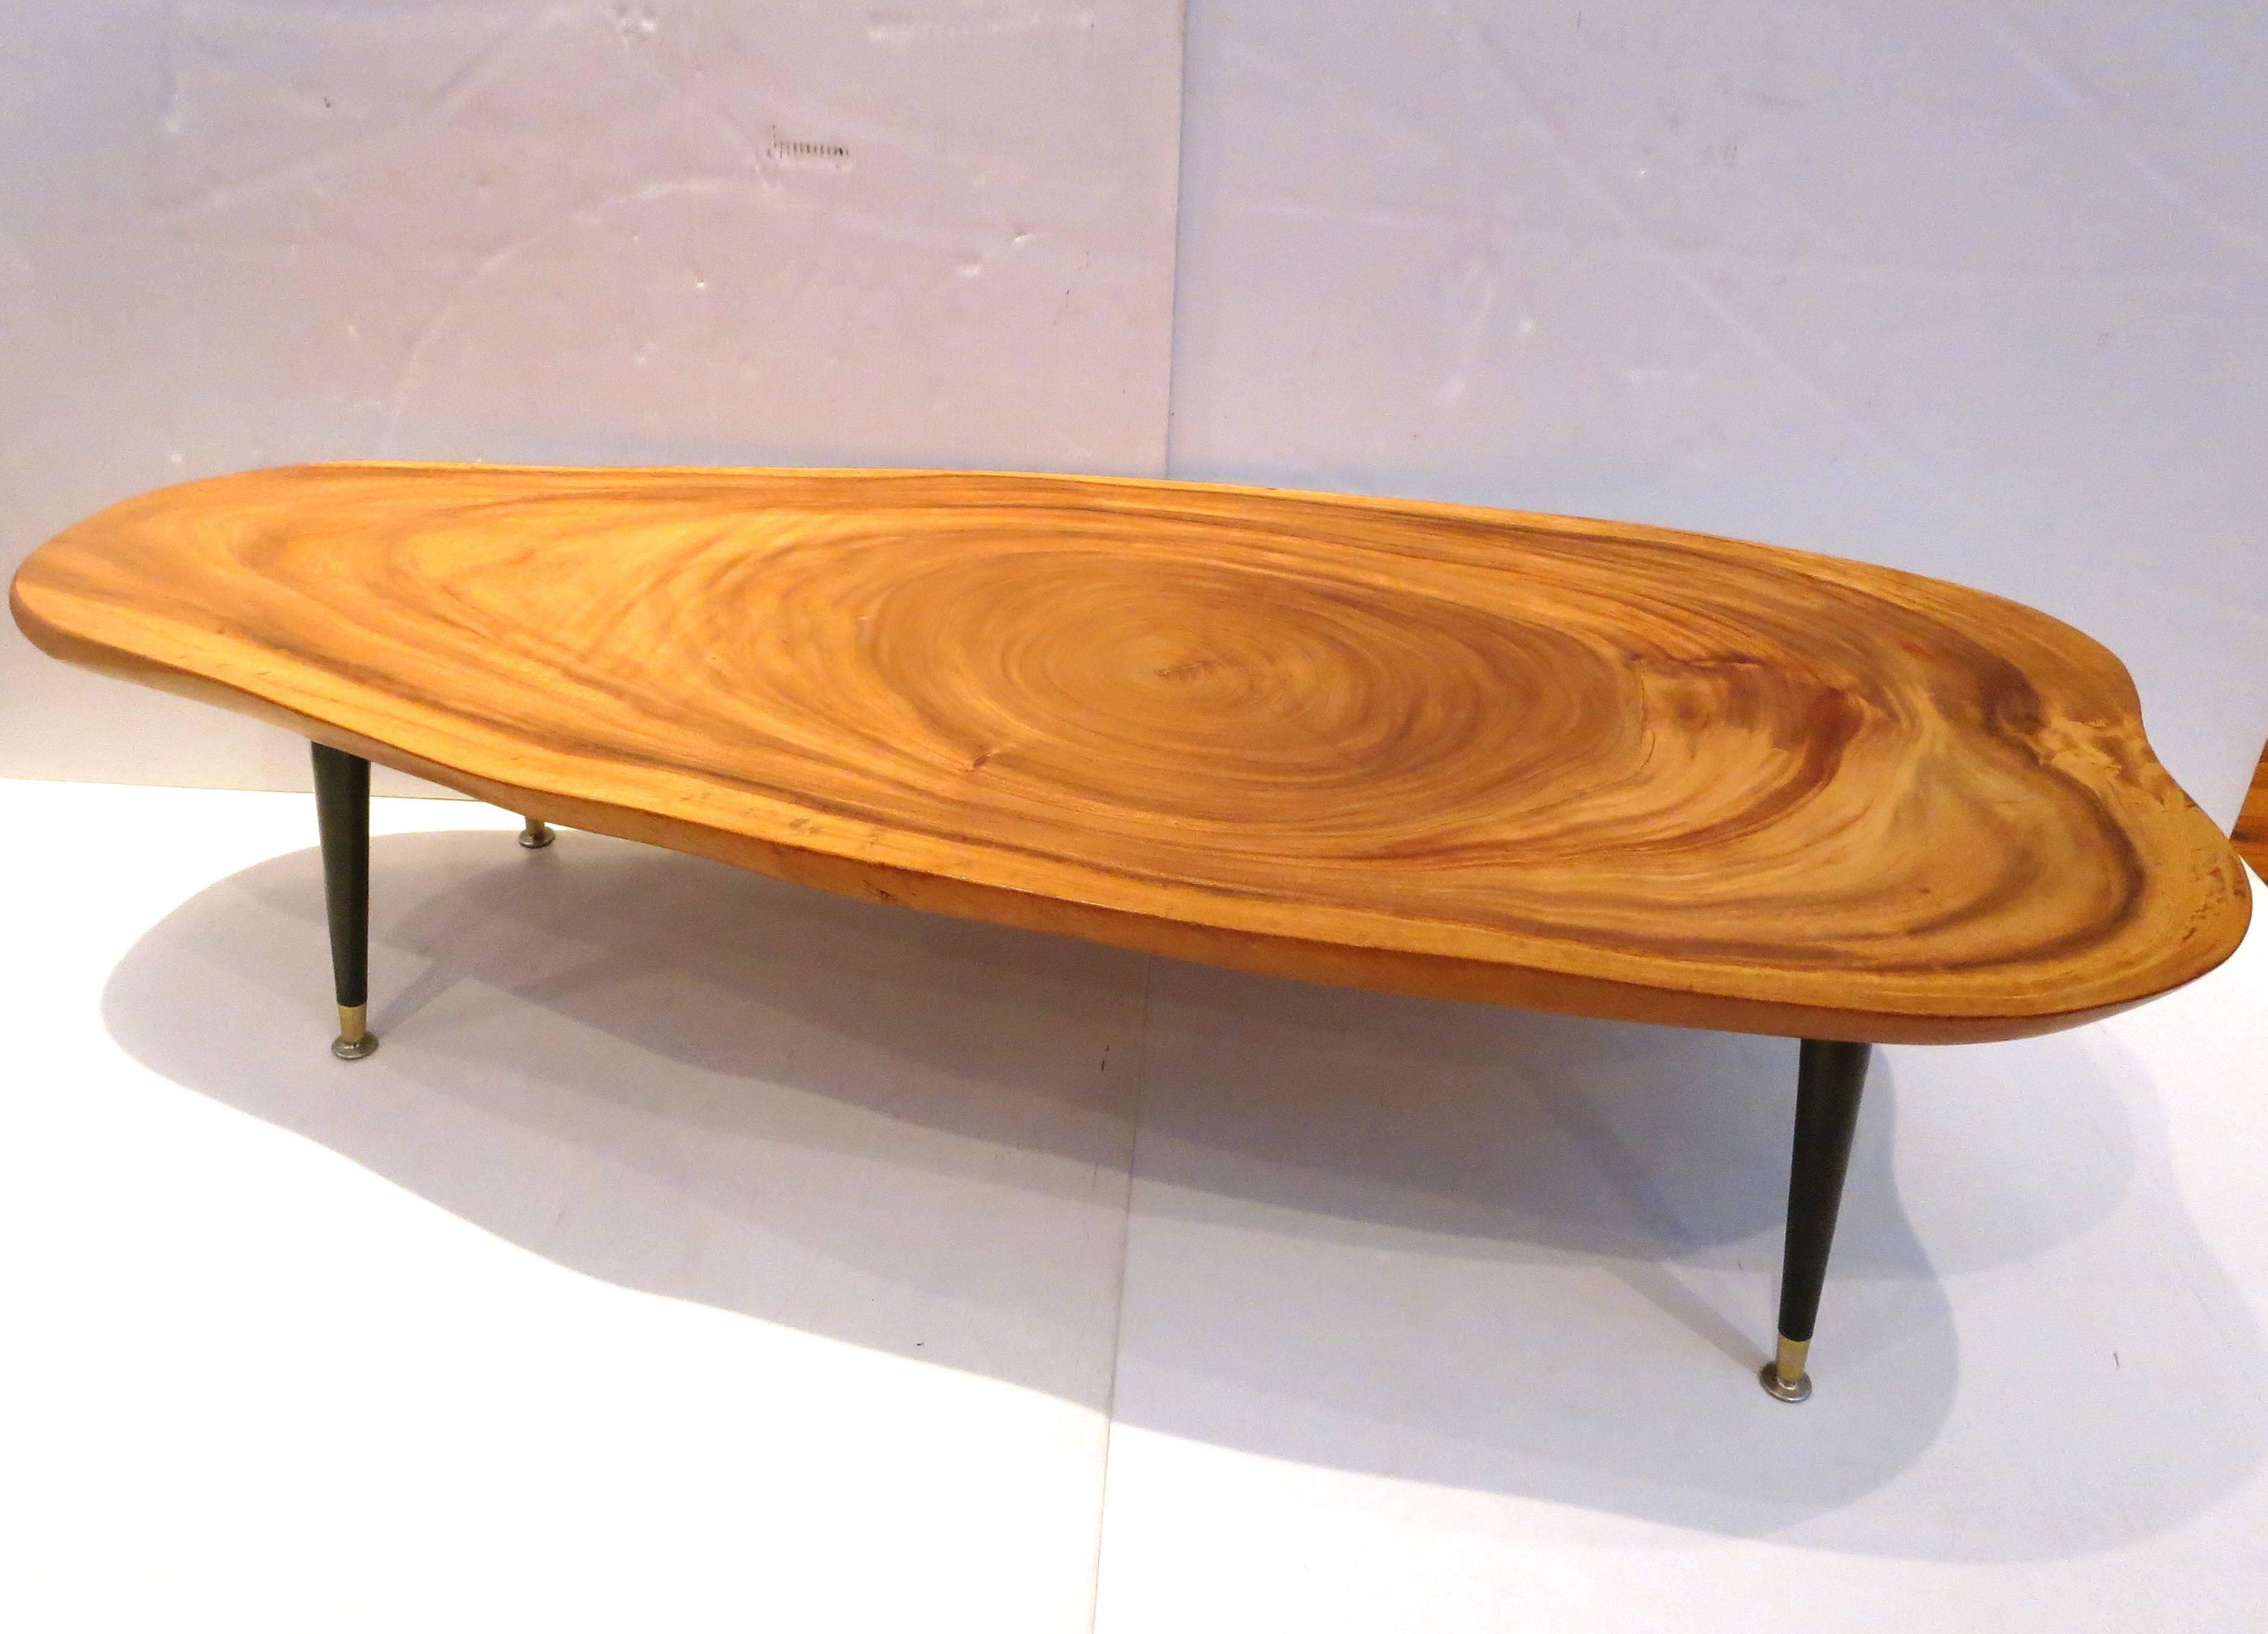 20th Century Massive Free-Form Organic Coffee Table Koa Wood Top and Tapered Legs